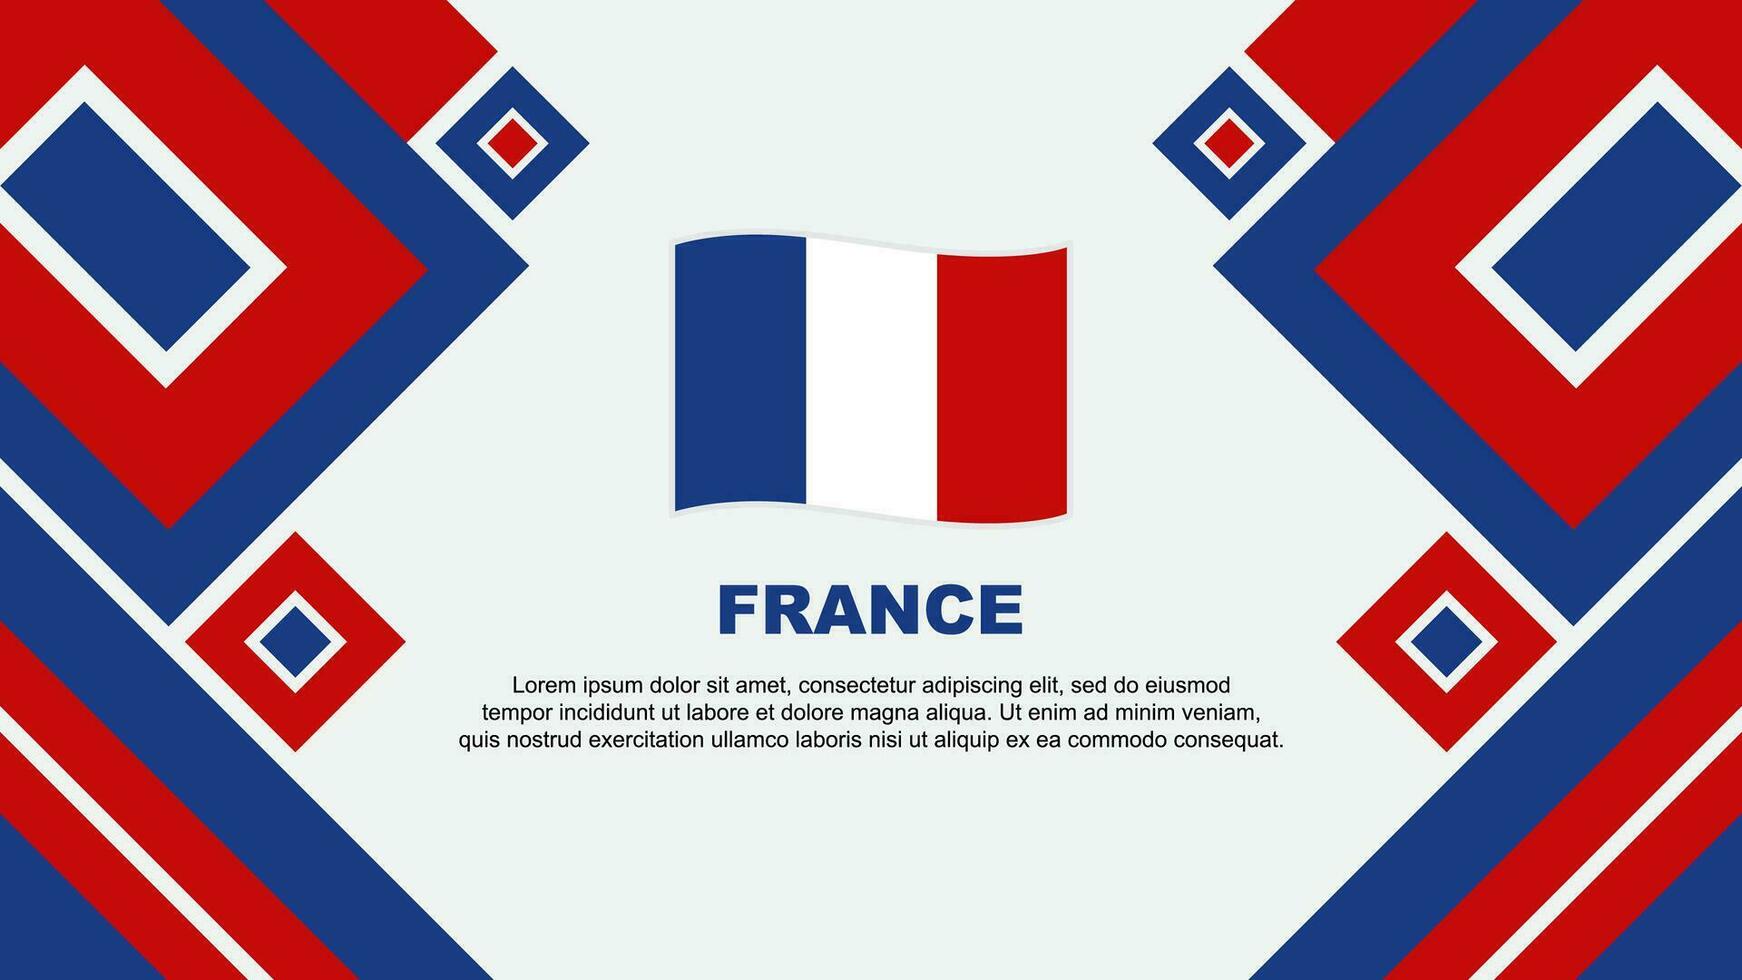 France Flag Abstract Background Design Template. France Independence Day Banner Wallpaper Vector Illustration. France Cartoon